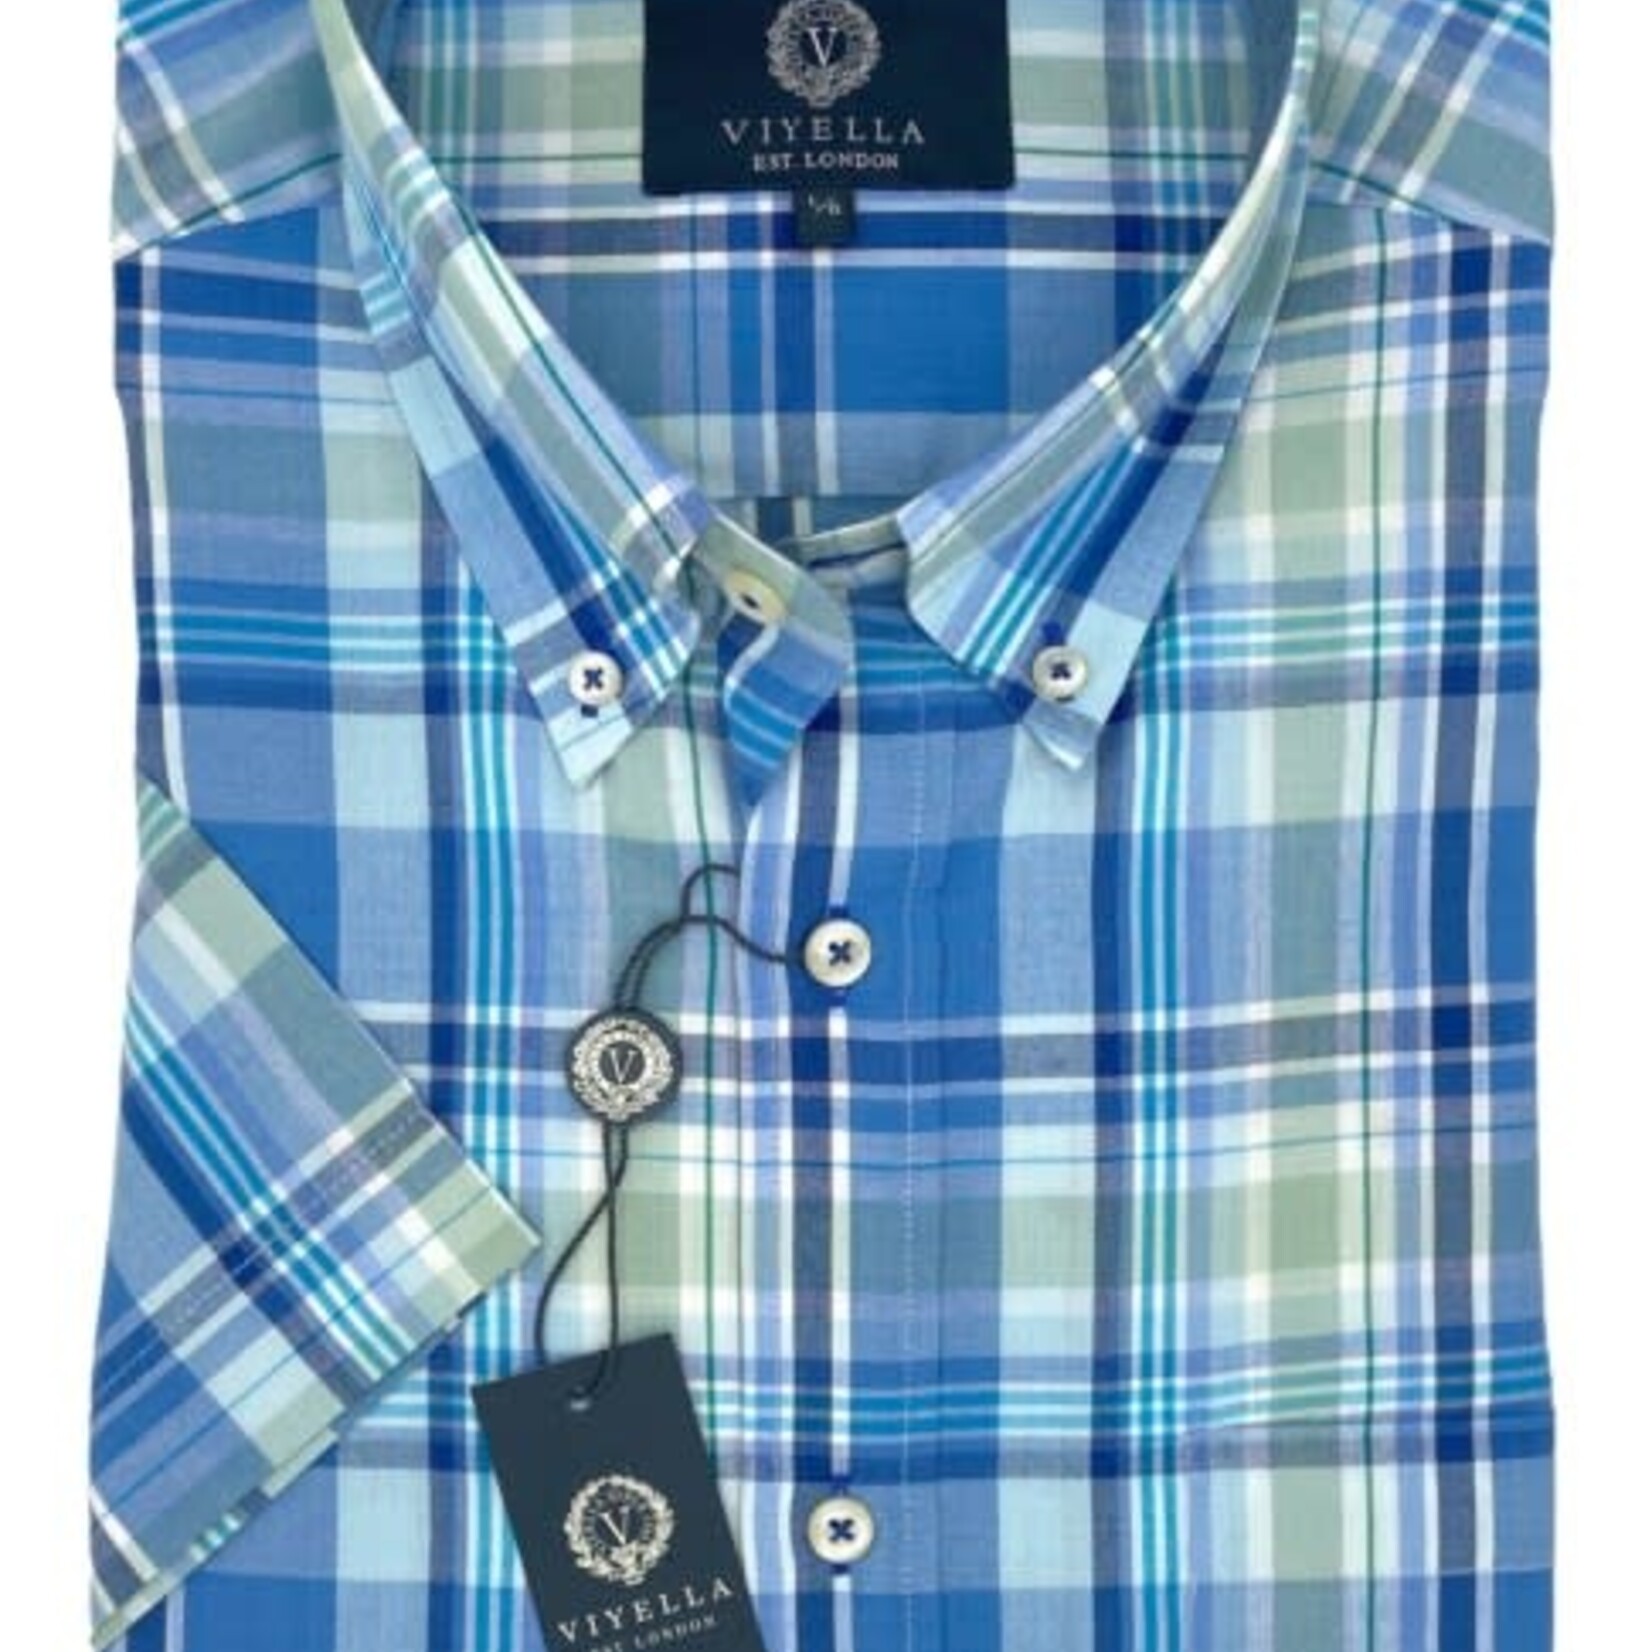 Viyella Viyella 100% Madras Cotton Short Sleeve Sport Shirt